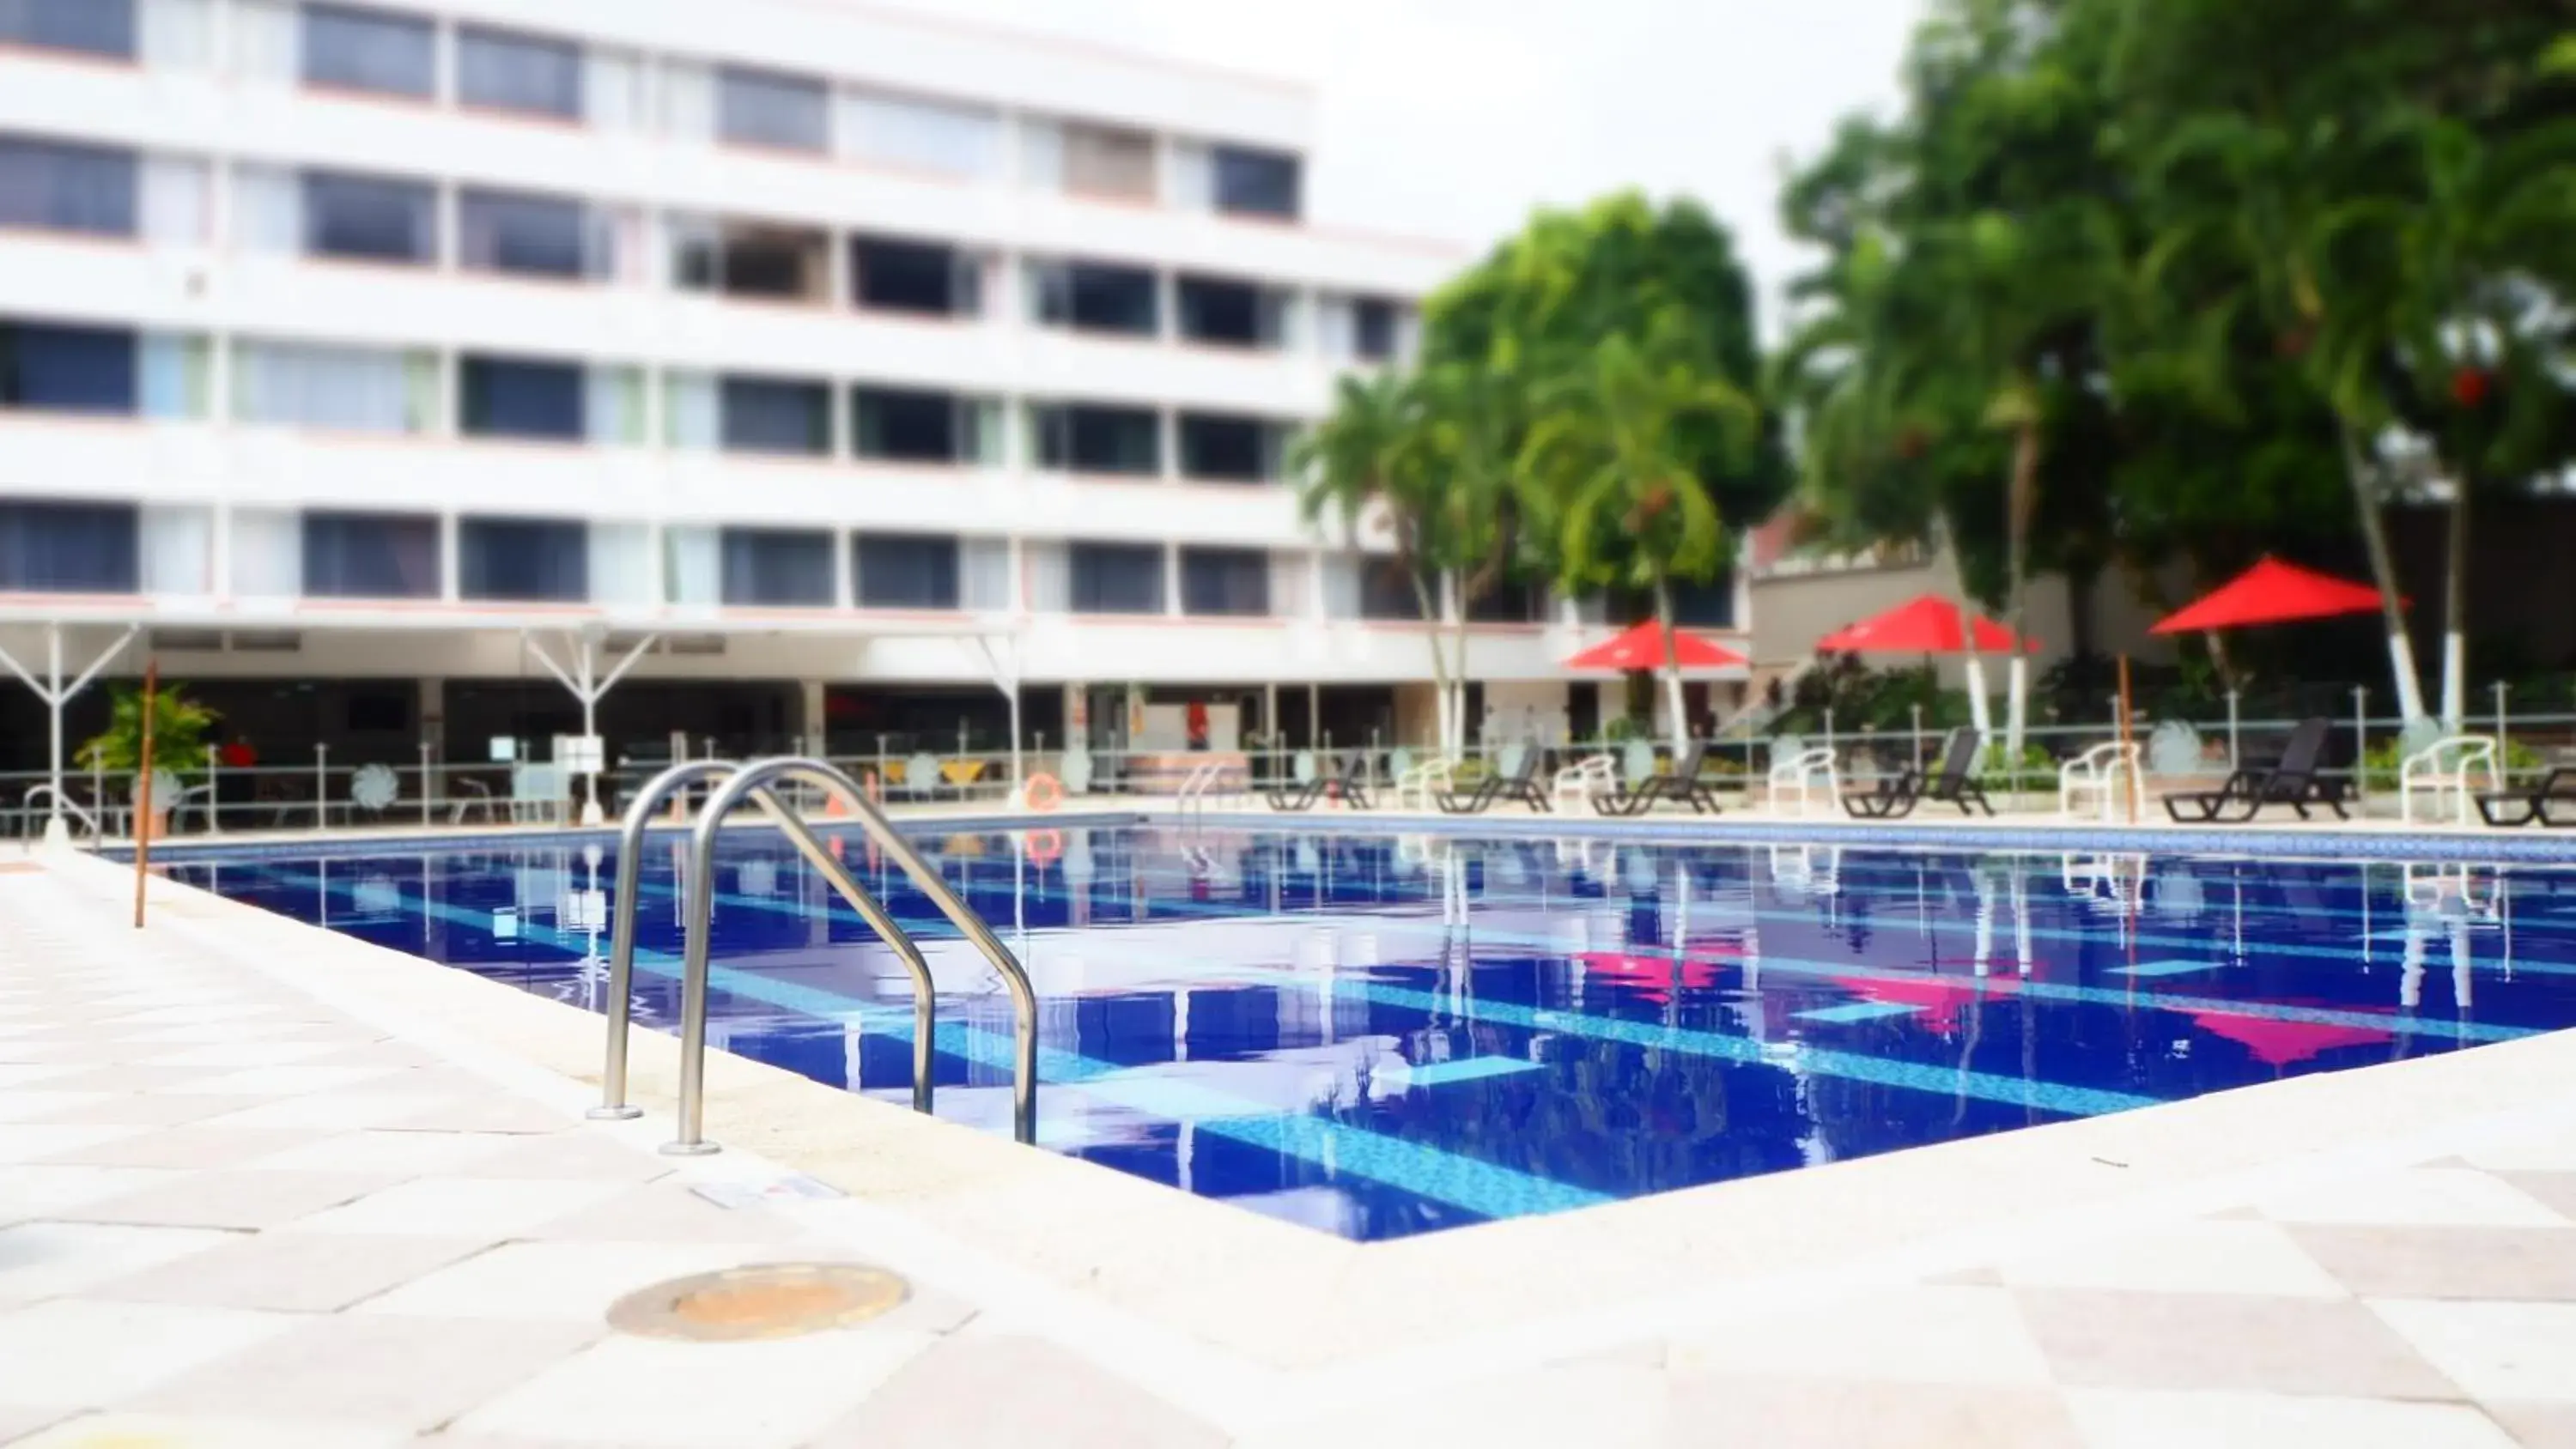 Swimming Pool in Hotel del Llano